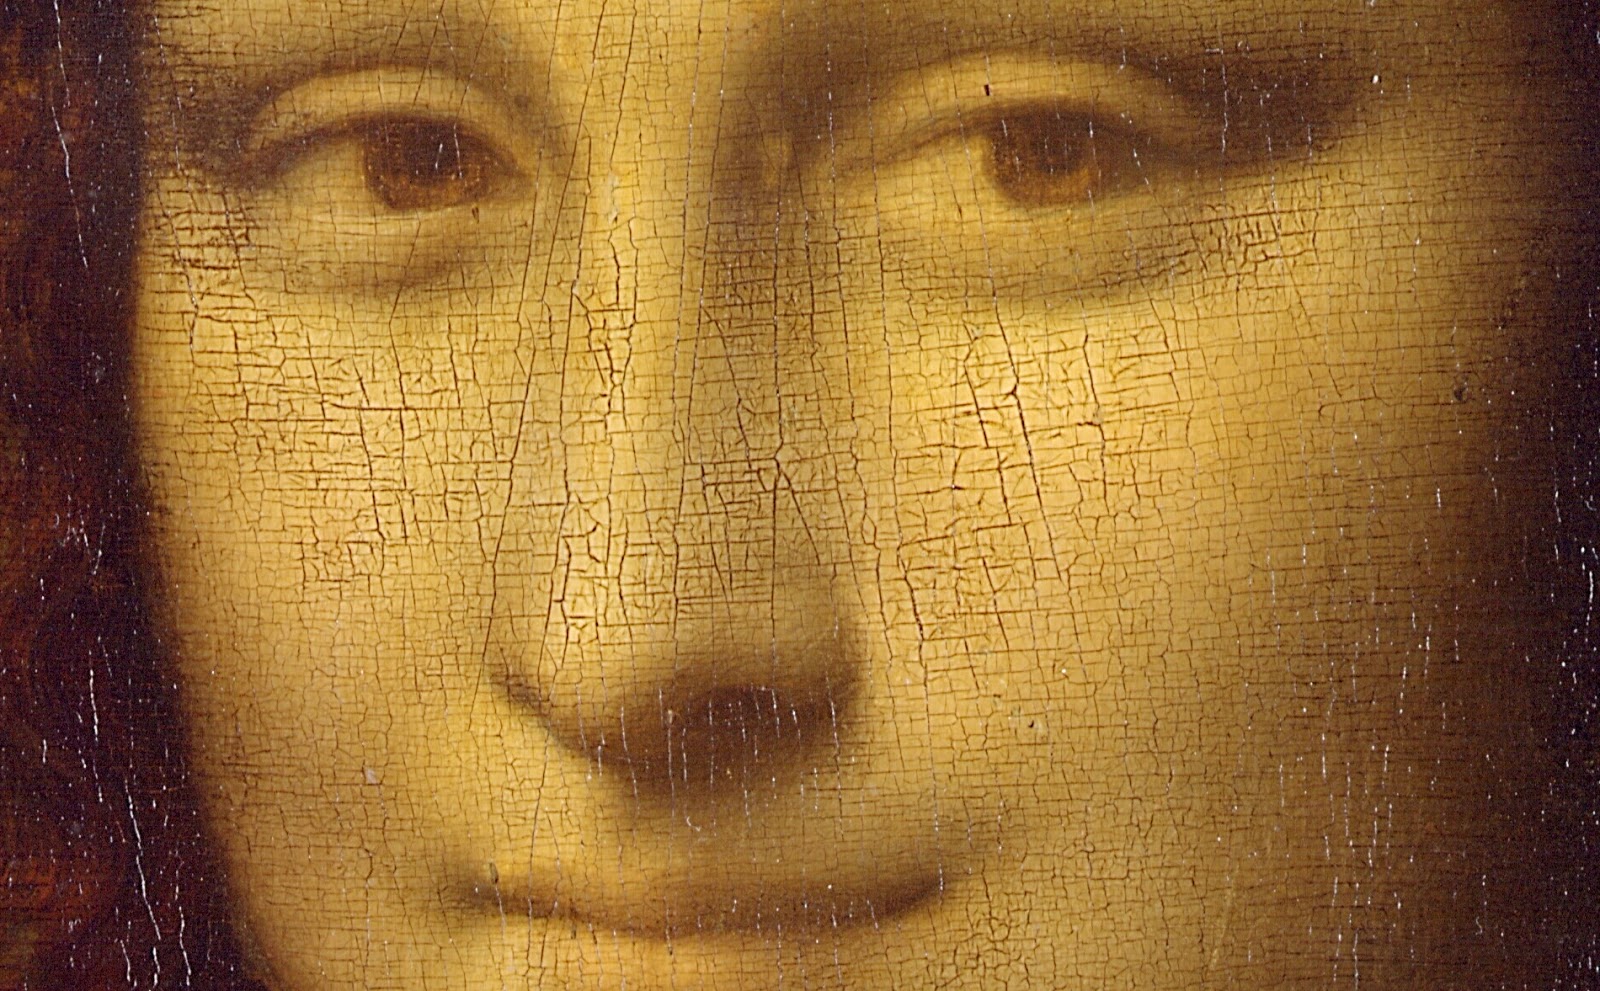 Leonardo+da+Vinci-1452-1519 (979).jpg